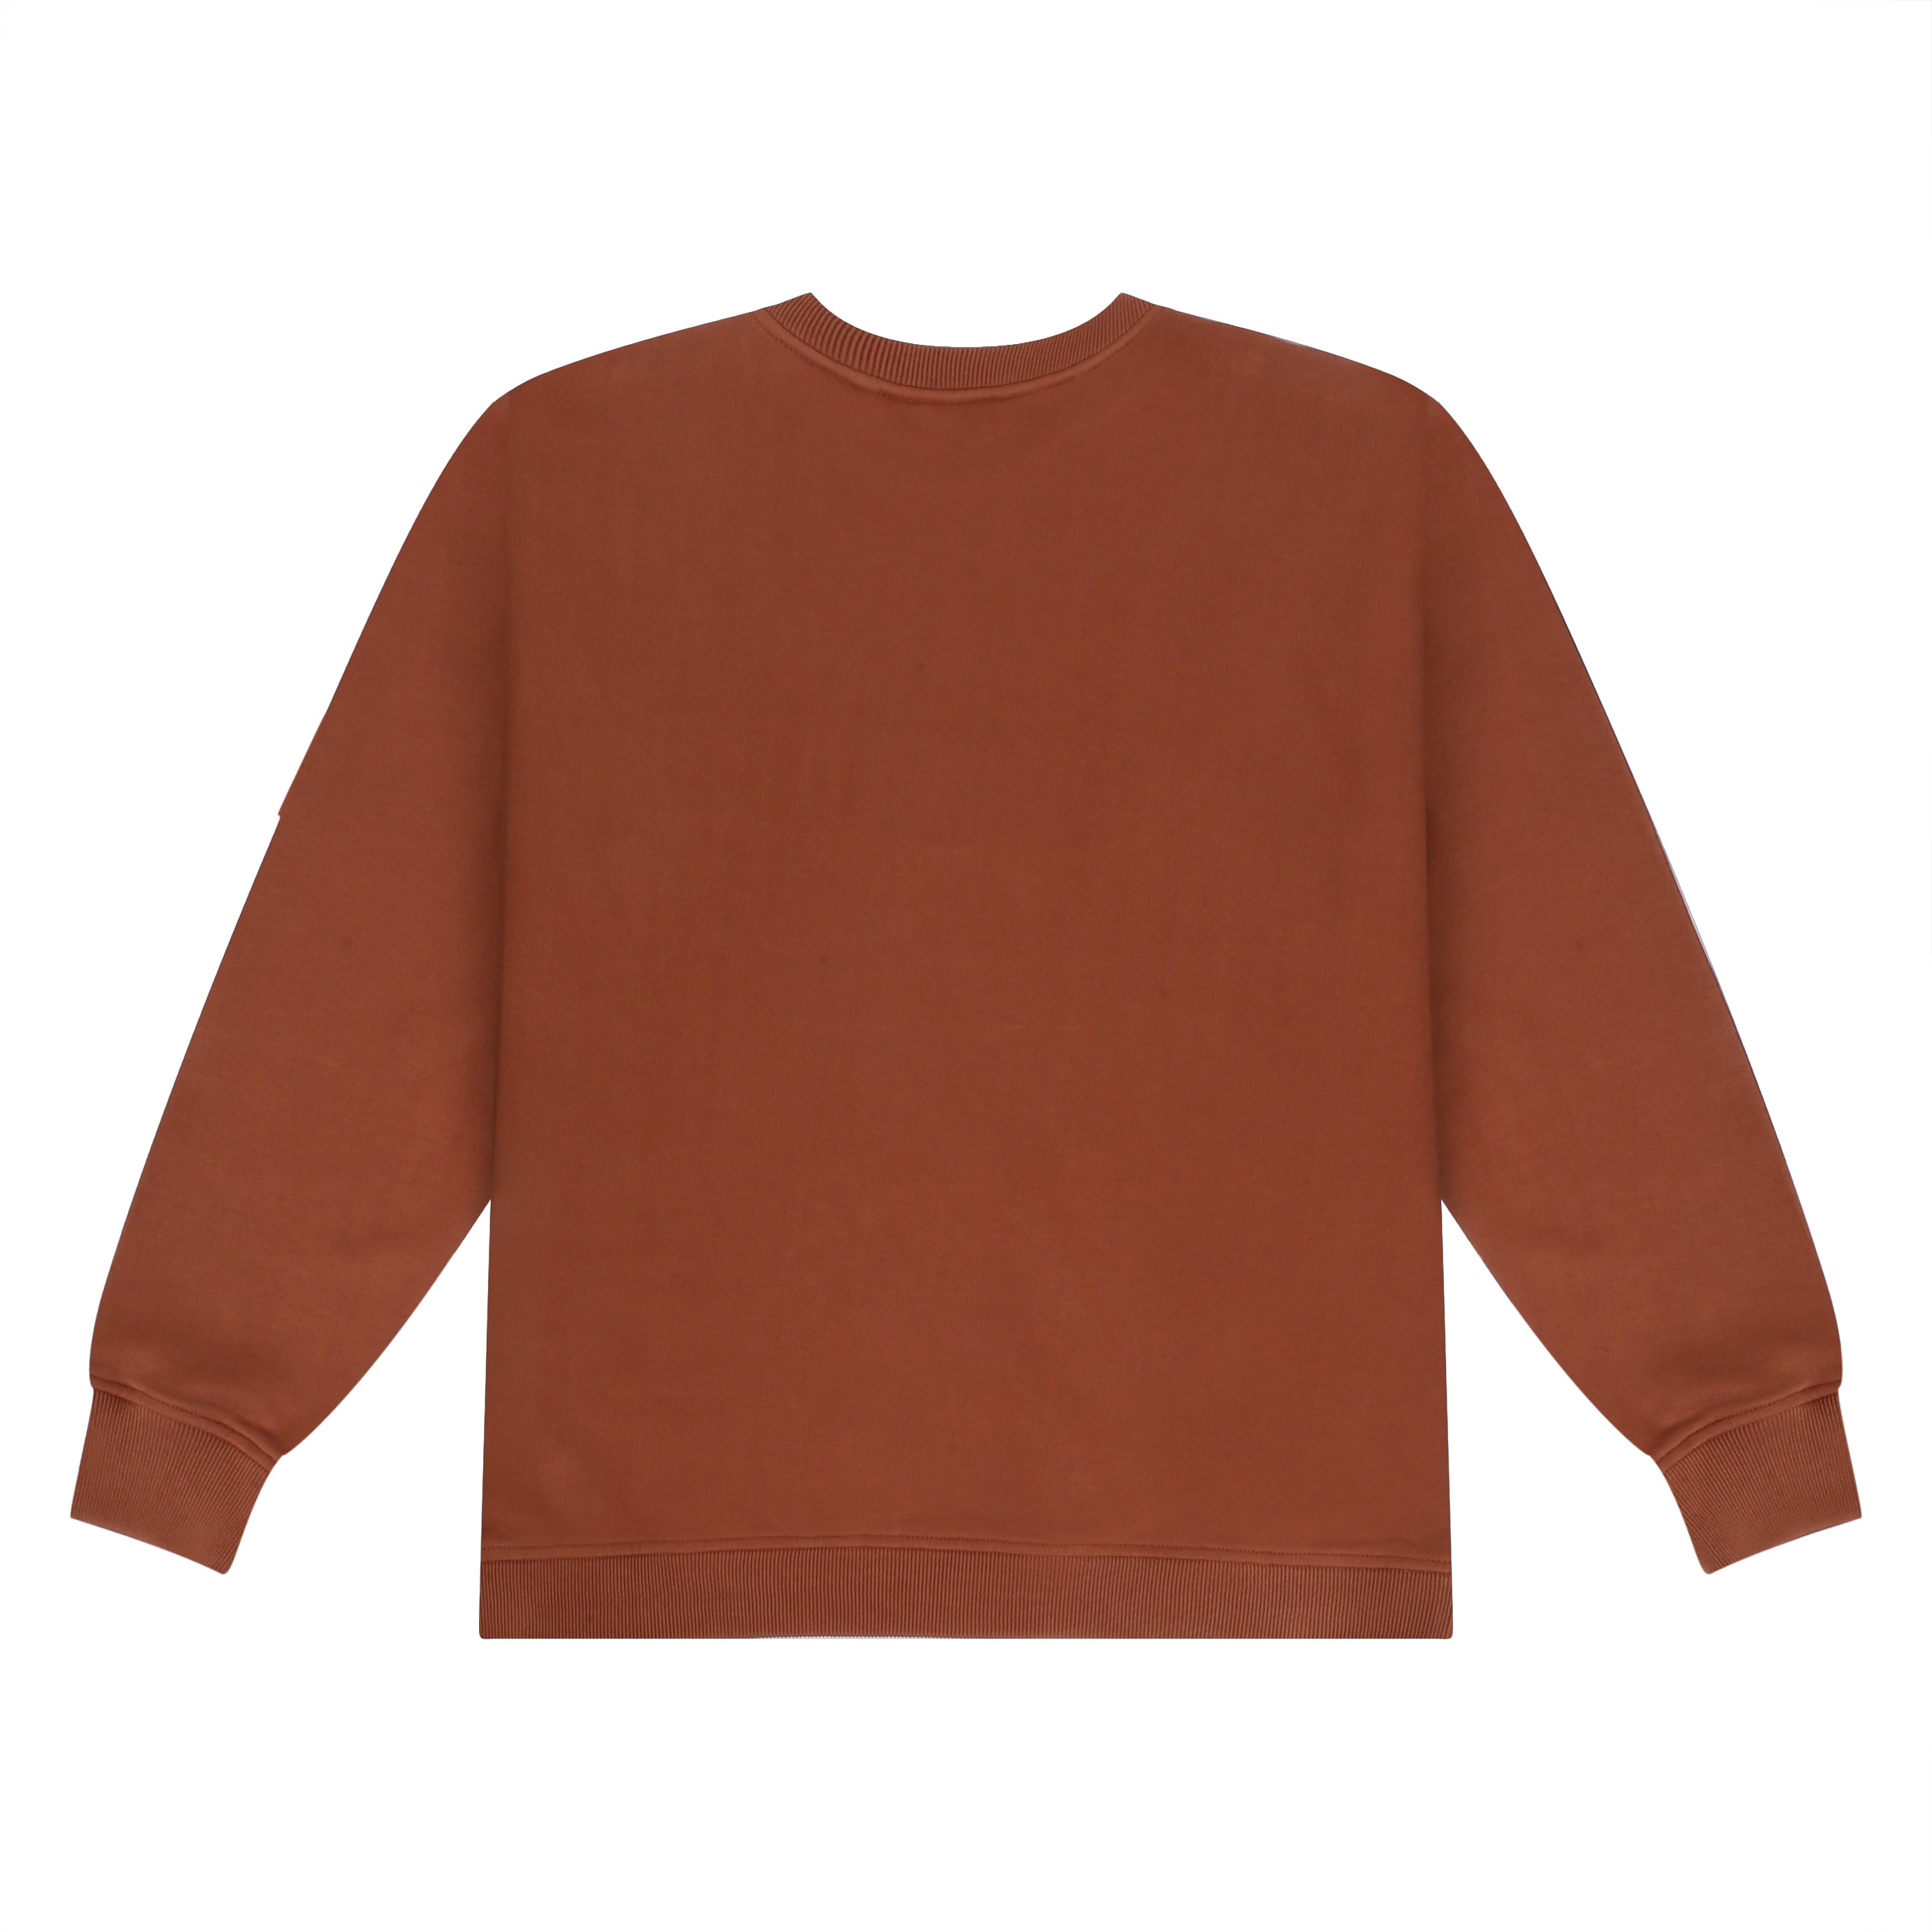 ‘K-Drift' sweatshirt